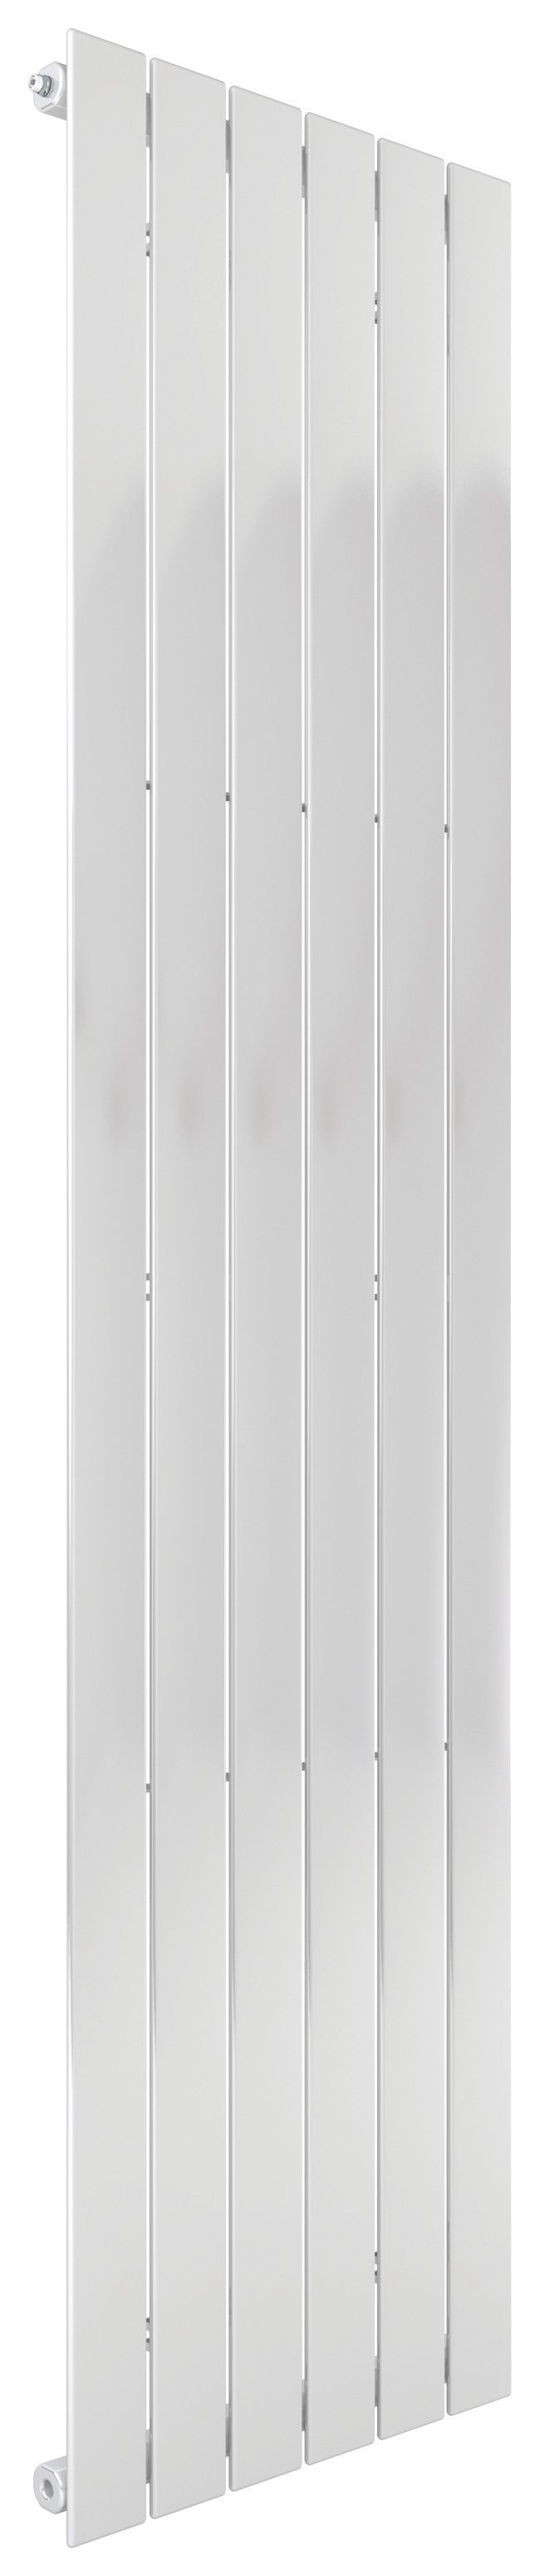 Image of Henrad Verona Vertical Designer Radiator - White 2000 x 440 mm